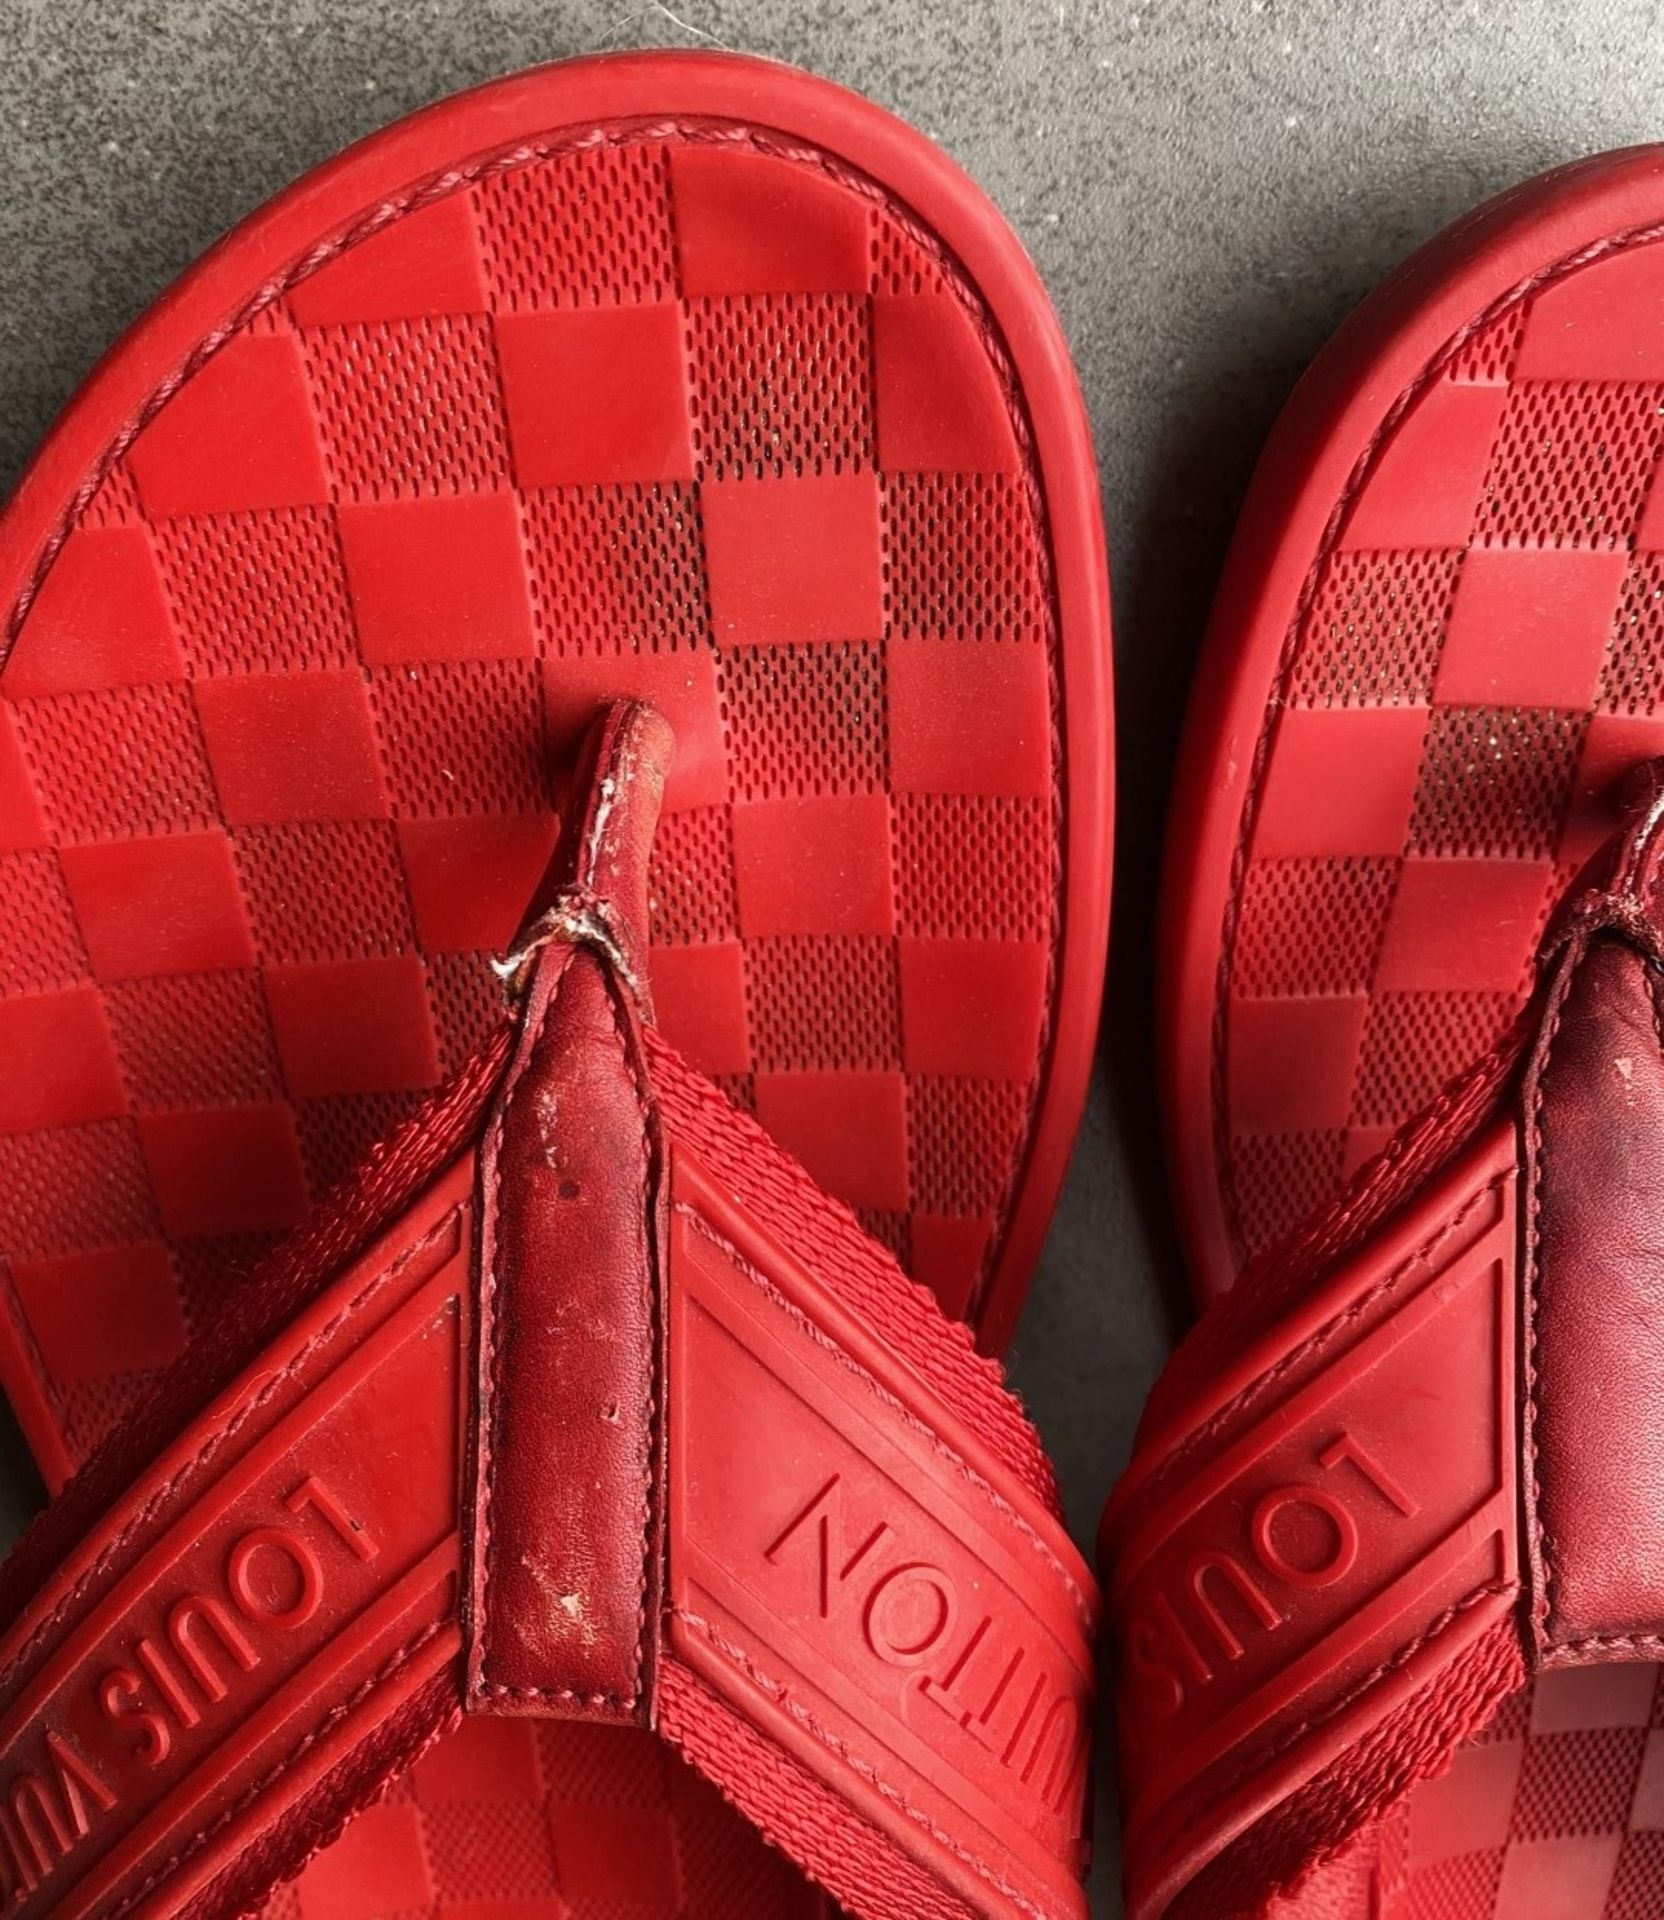 1 x Pair Of Men's Genuine Louis Vuitton Flip Flops In Red - Size Approx: 42 - Original RRP £350.00 - Image 3 of 3